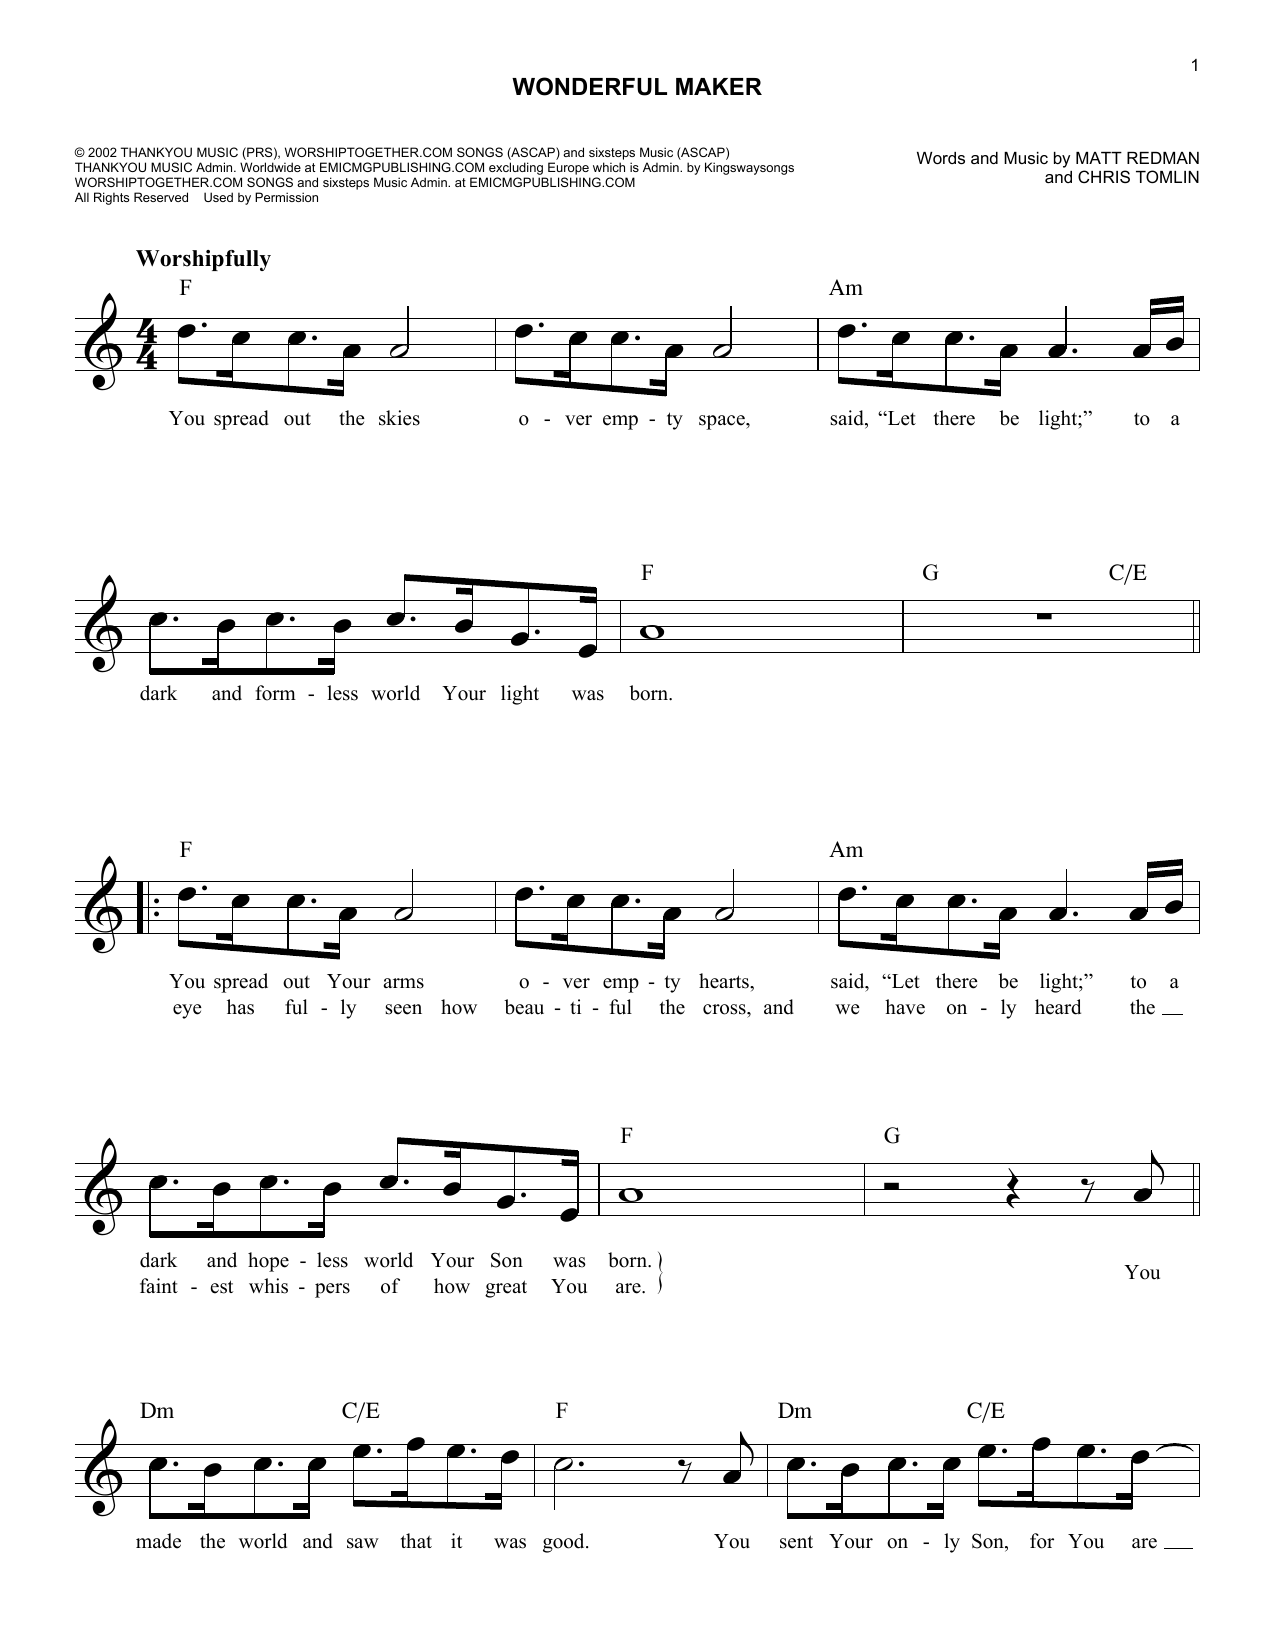 Matt Redman Wonderful Maker sheet music notes and chords arranged for Lead Sheet / Fake Book